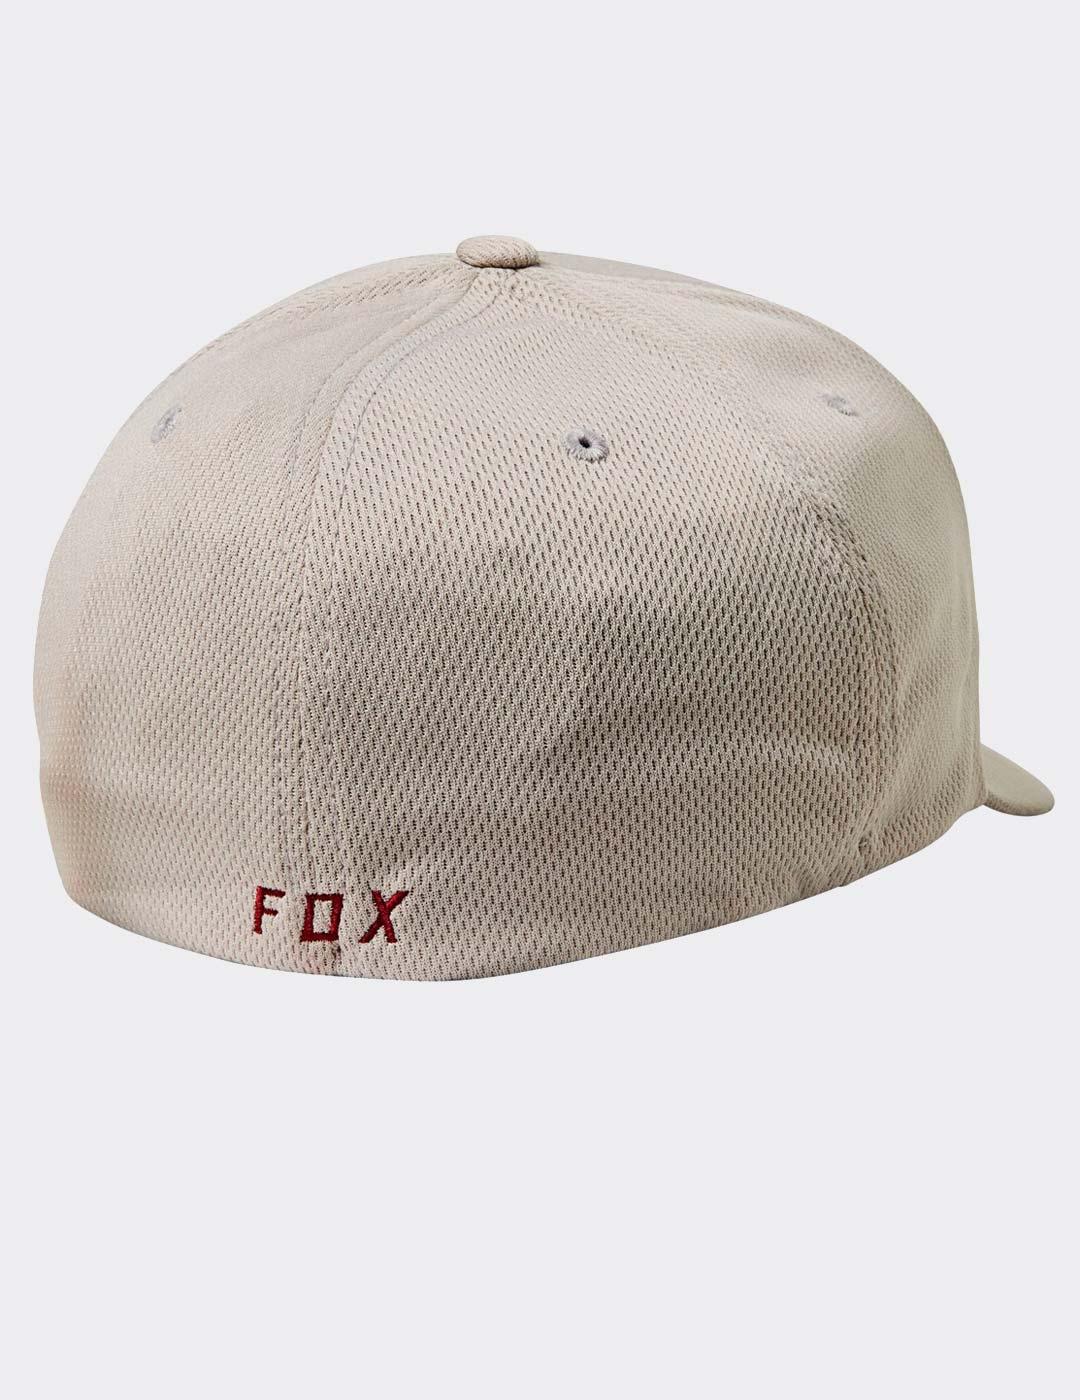 Gorra FOX LITHOTYPE FLEXFIT HAT - Gris